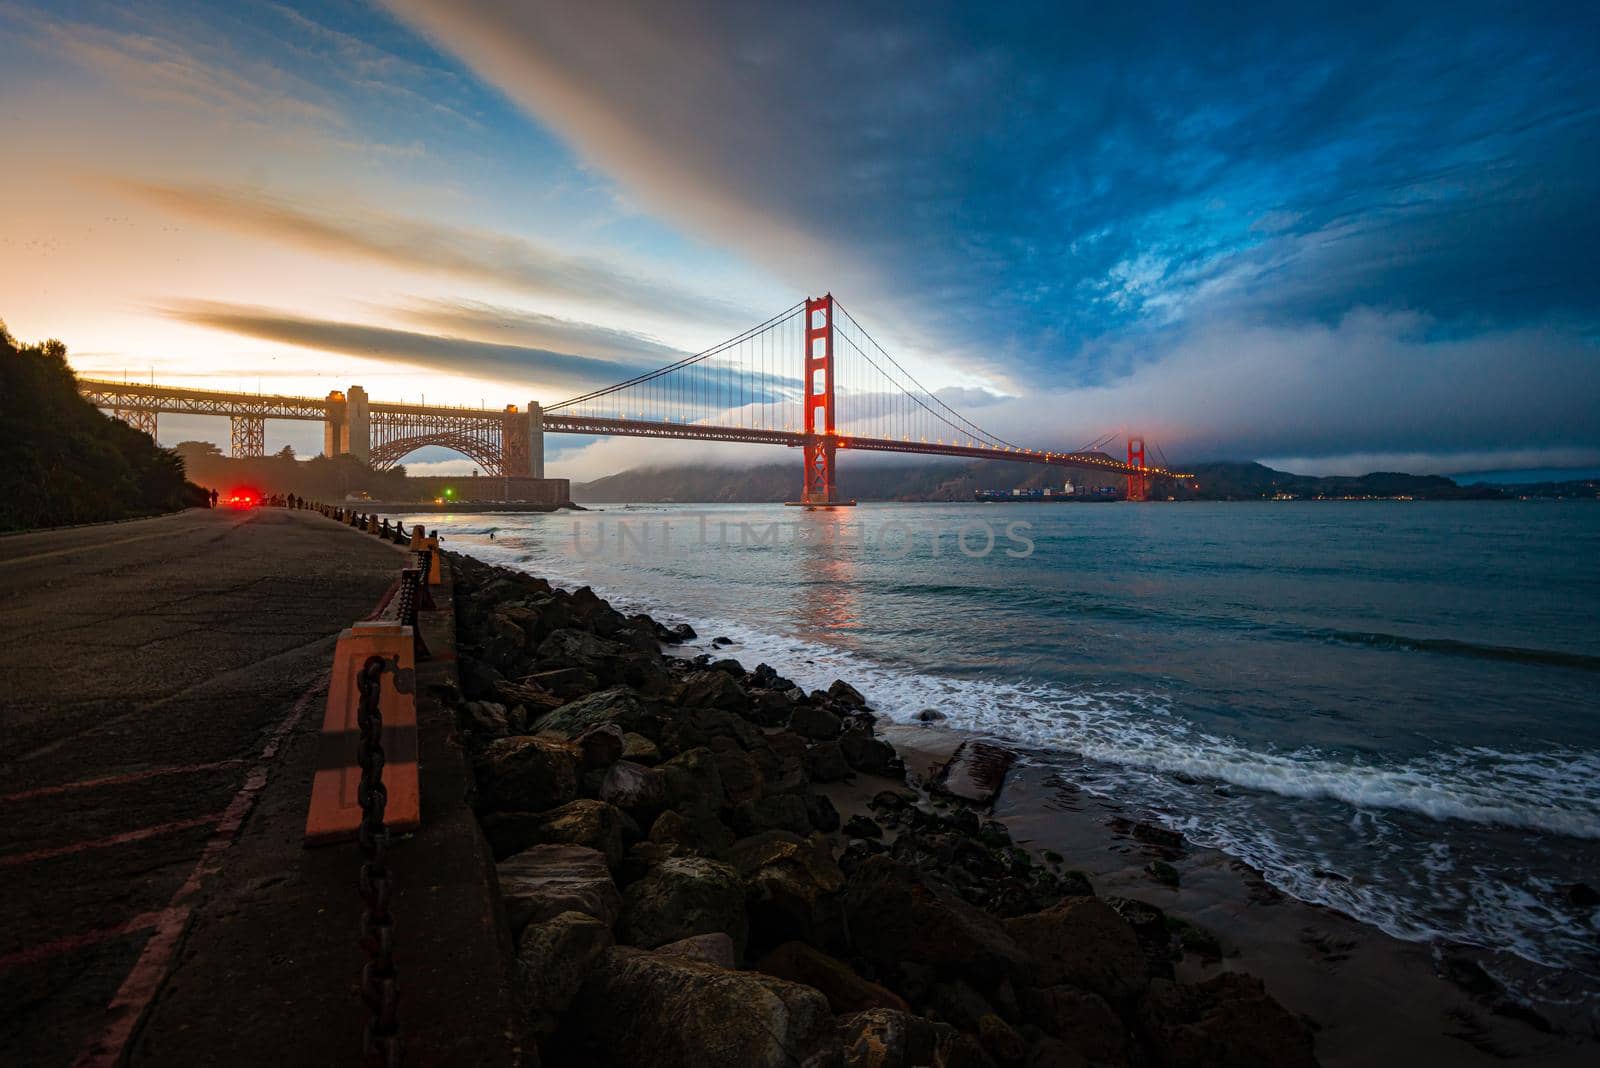 Golden gate bridge in San Francisco, California by Yolshin